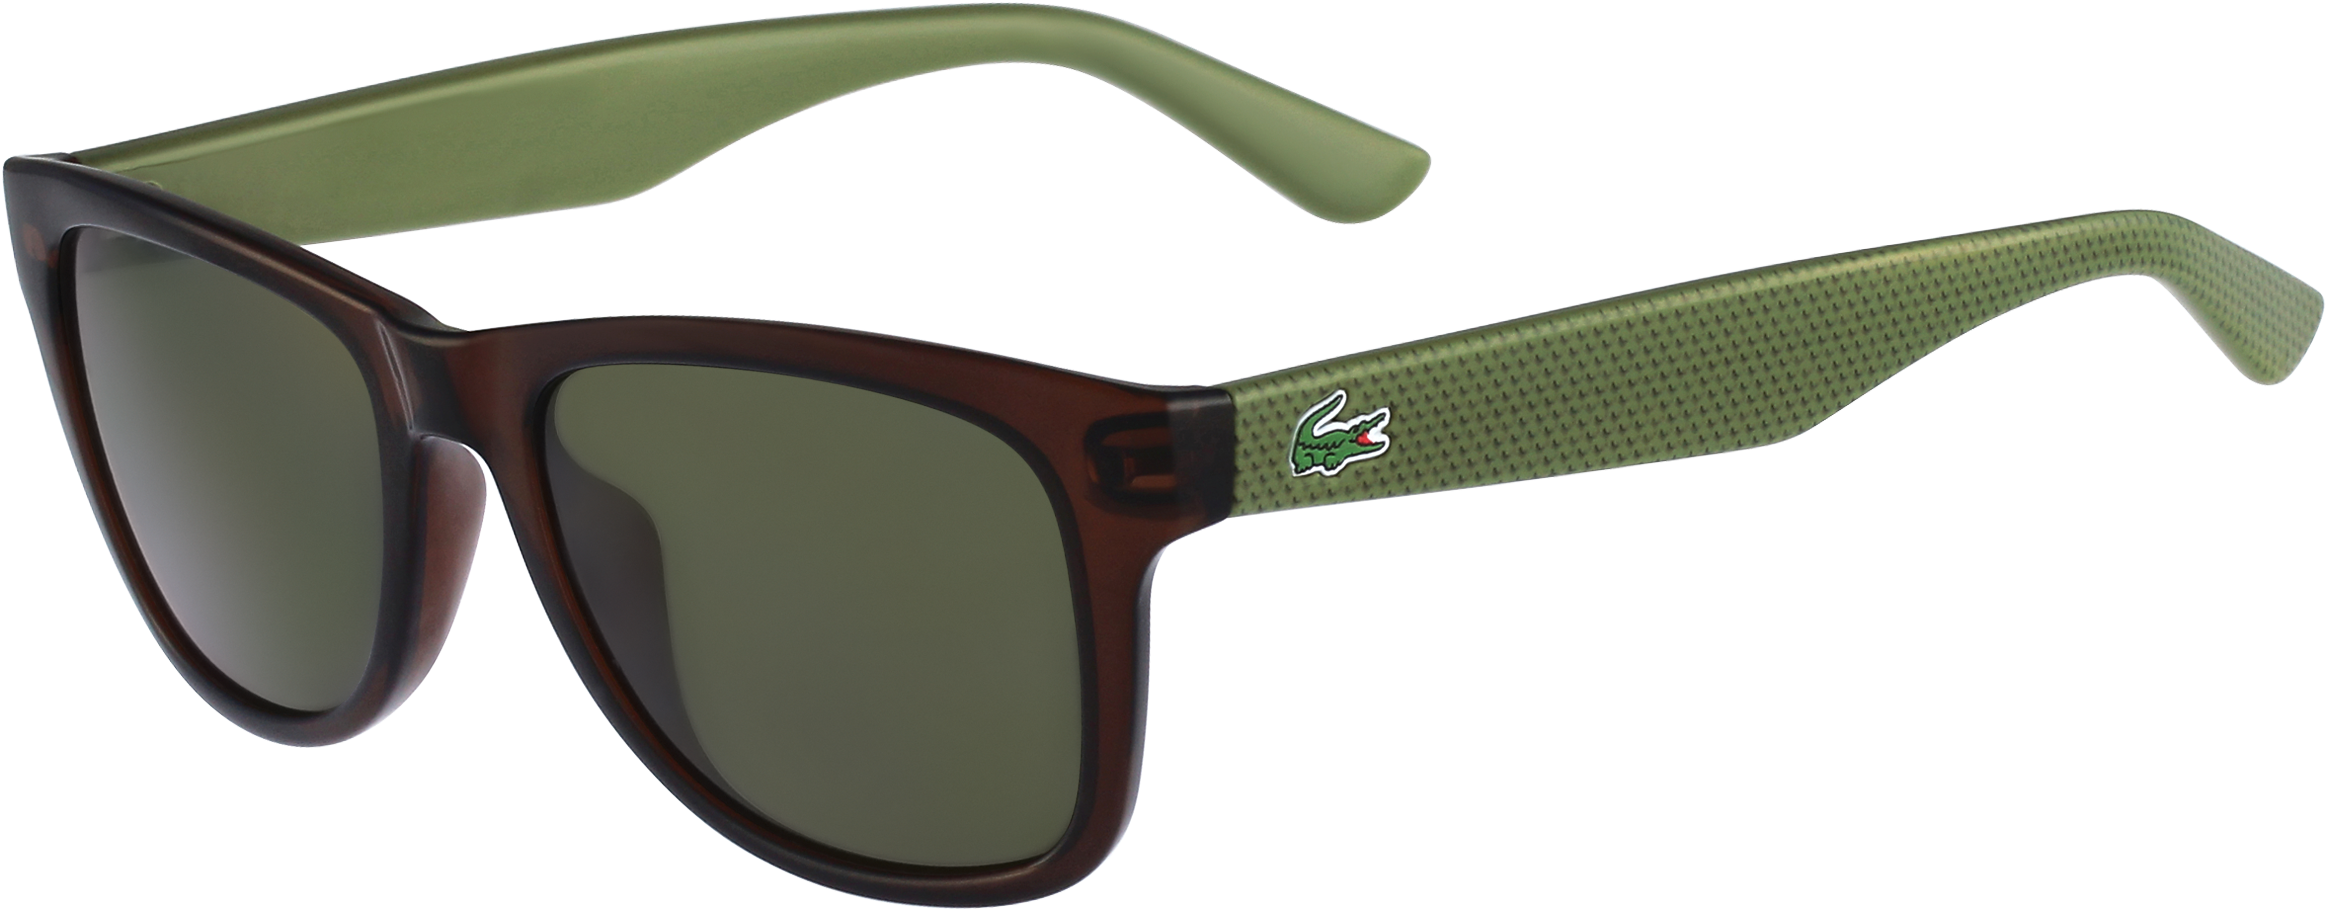 Lacoste Shades - Lacoste L734s 210 Brown Women/men Sunglasses (2500x1400), Png Download